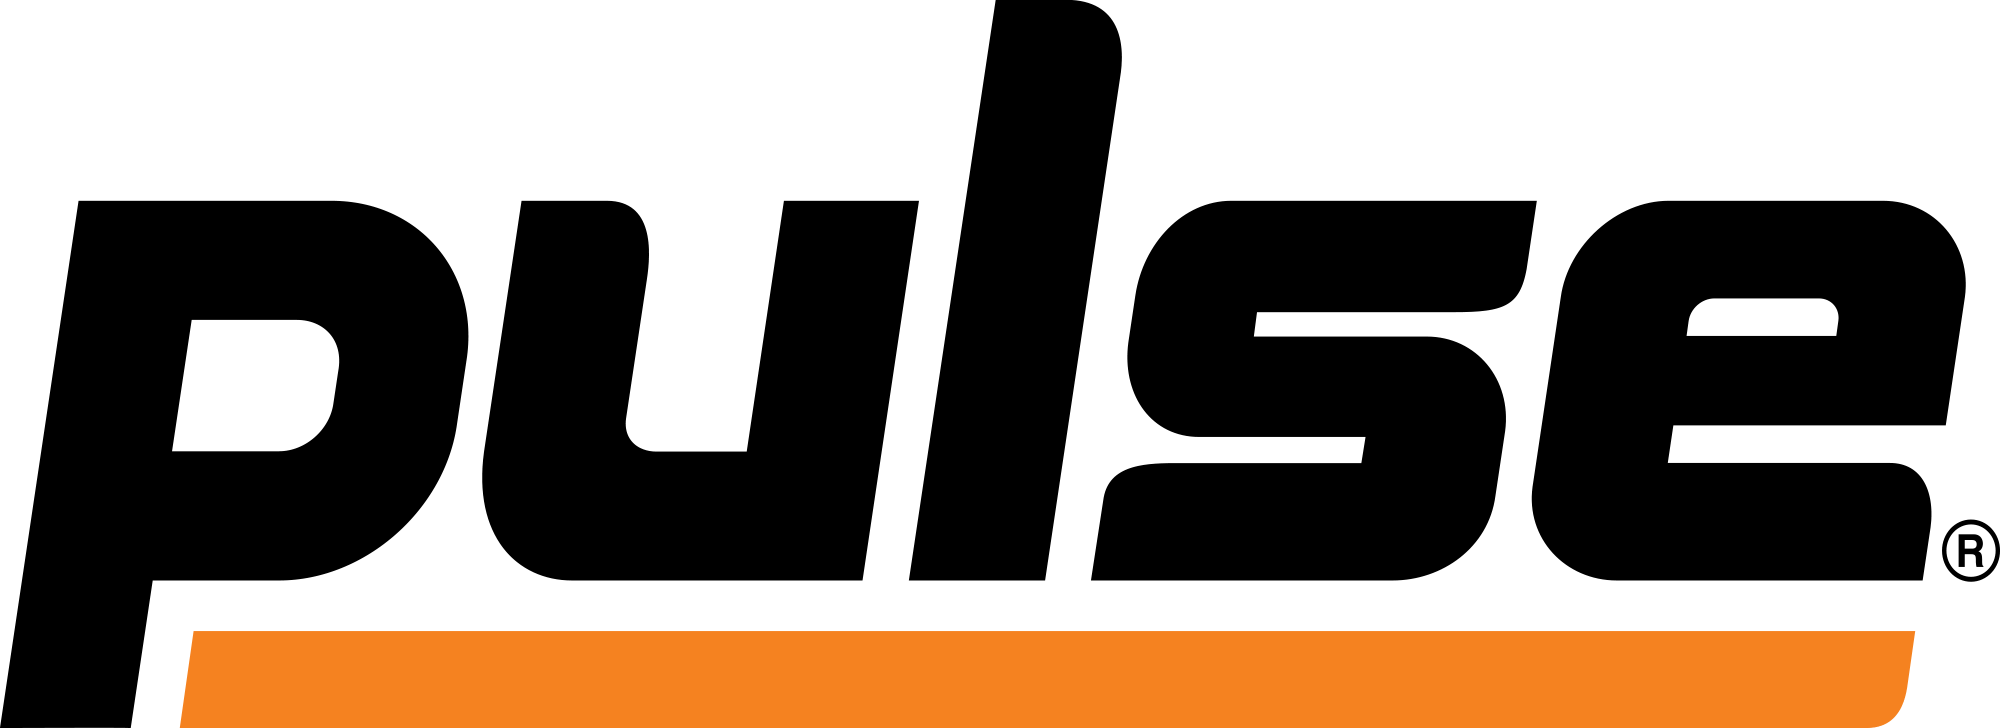 Pulse Logo - PULSE Reproduction Art | PULSE Network